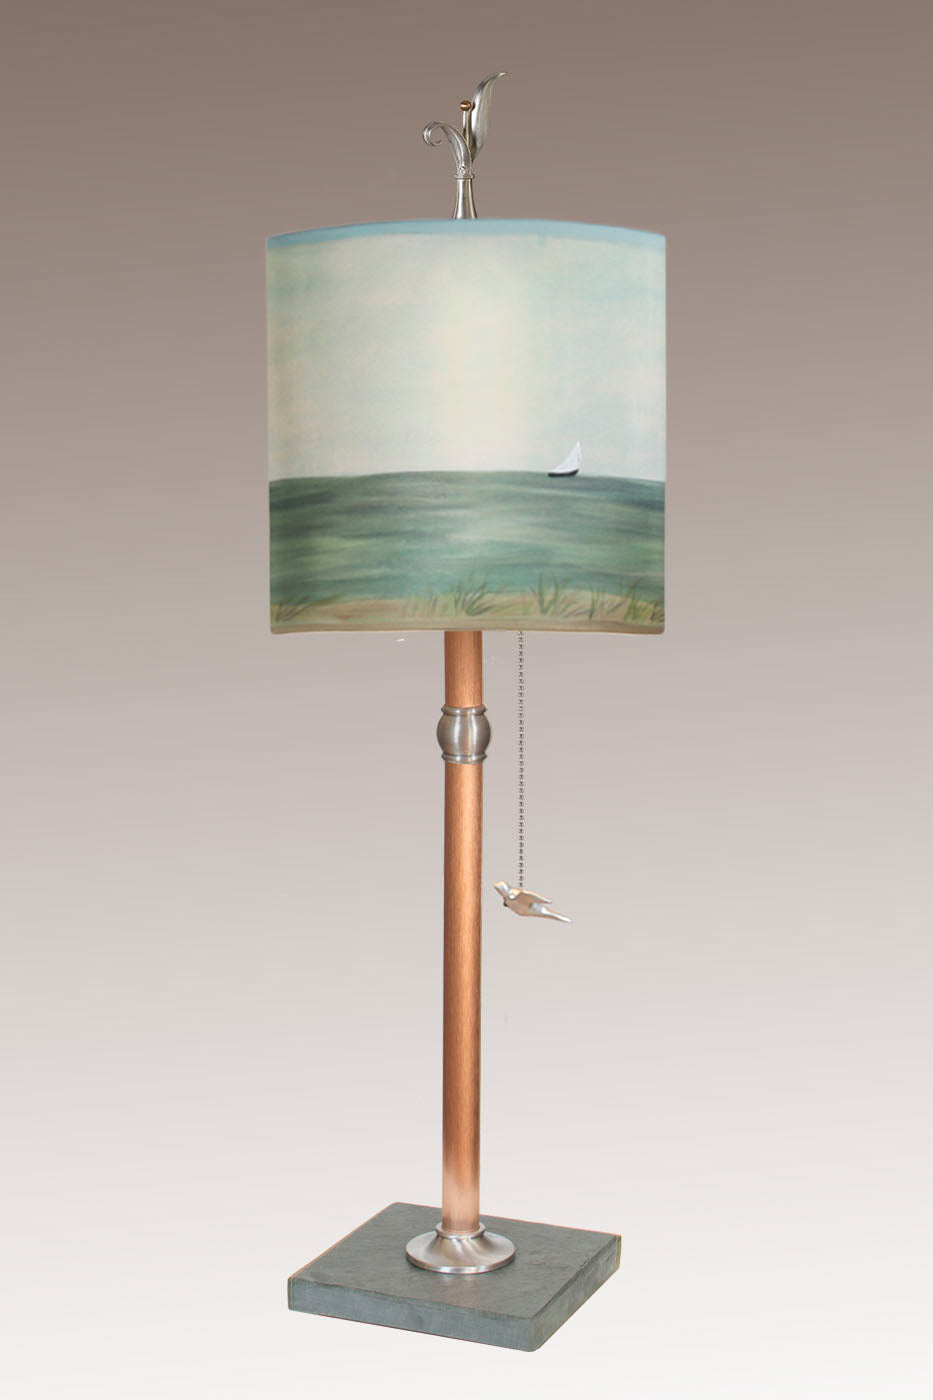 Copper Table Lamp with Medium Drum Shade in Shore